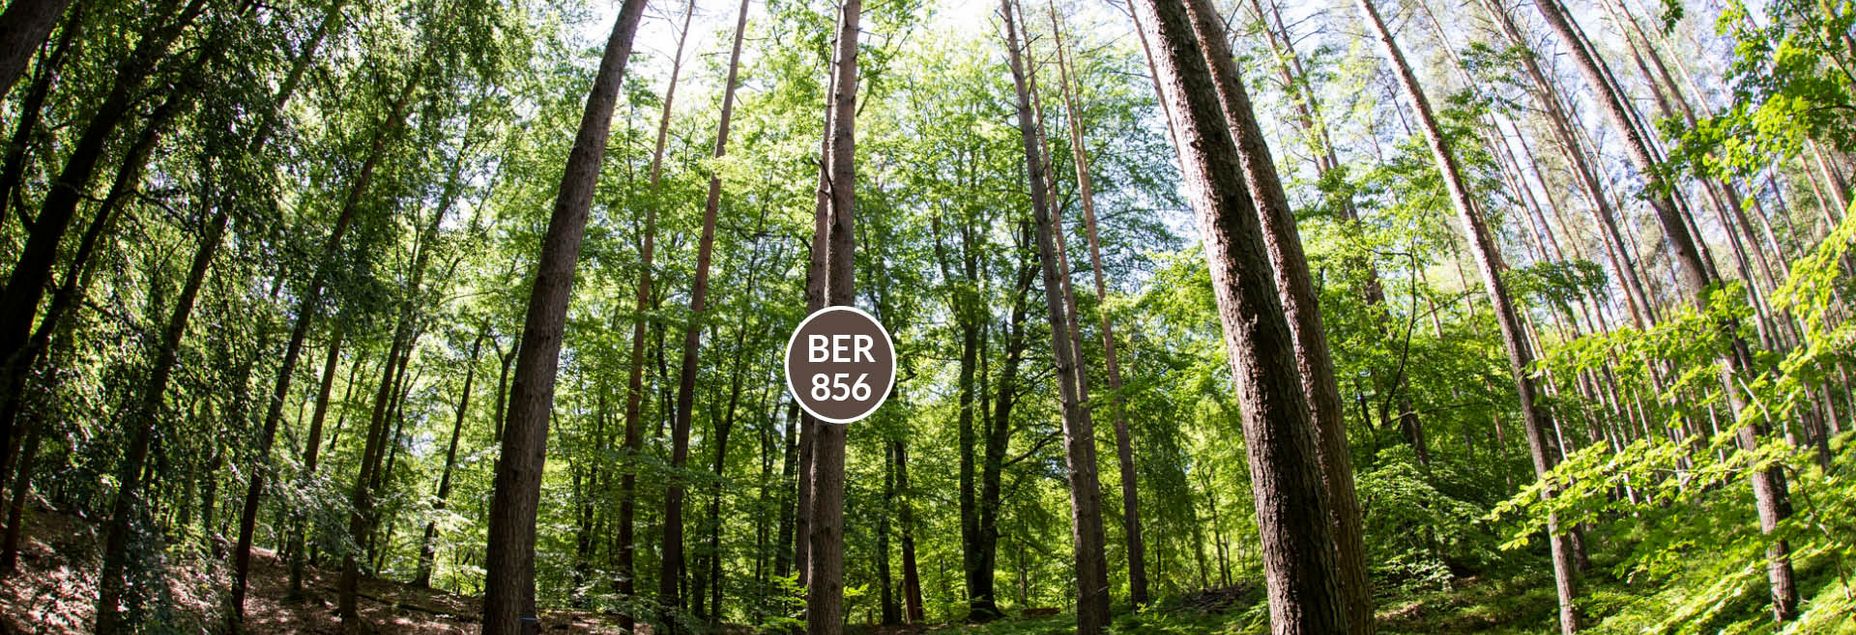 Baum BER 856 - Fisheyeperspektive